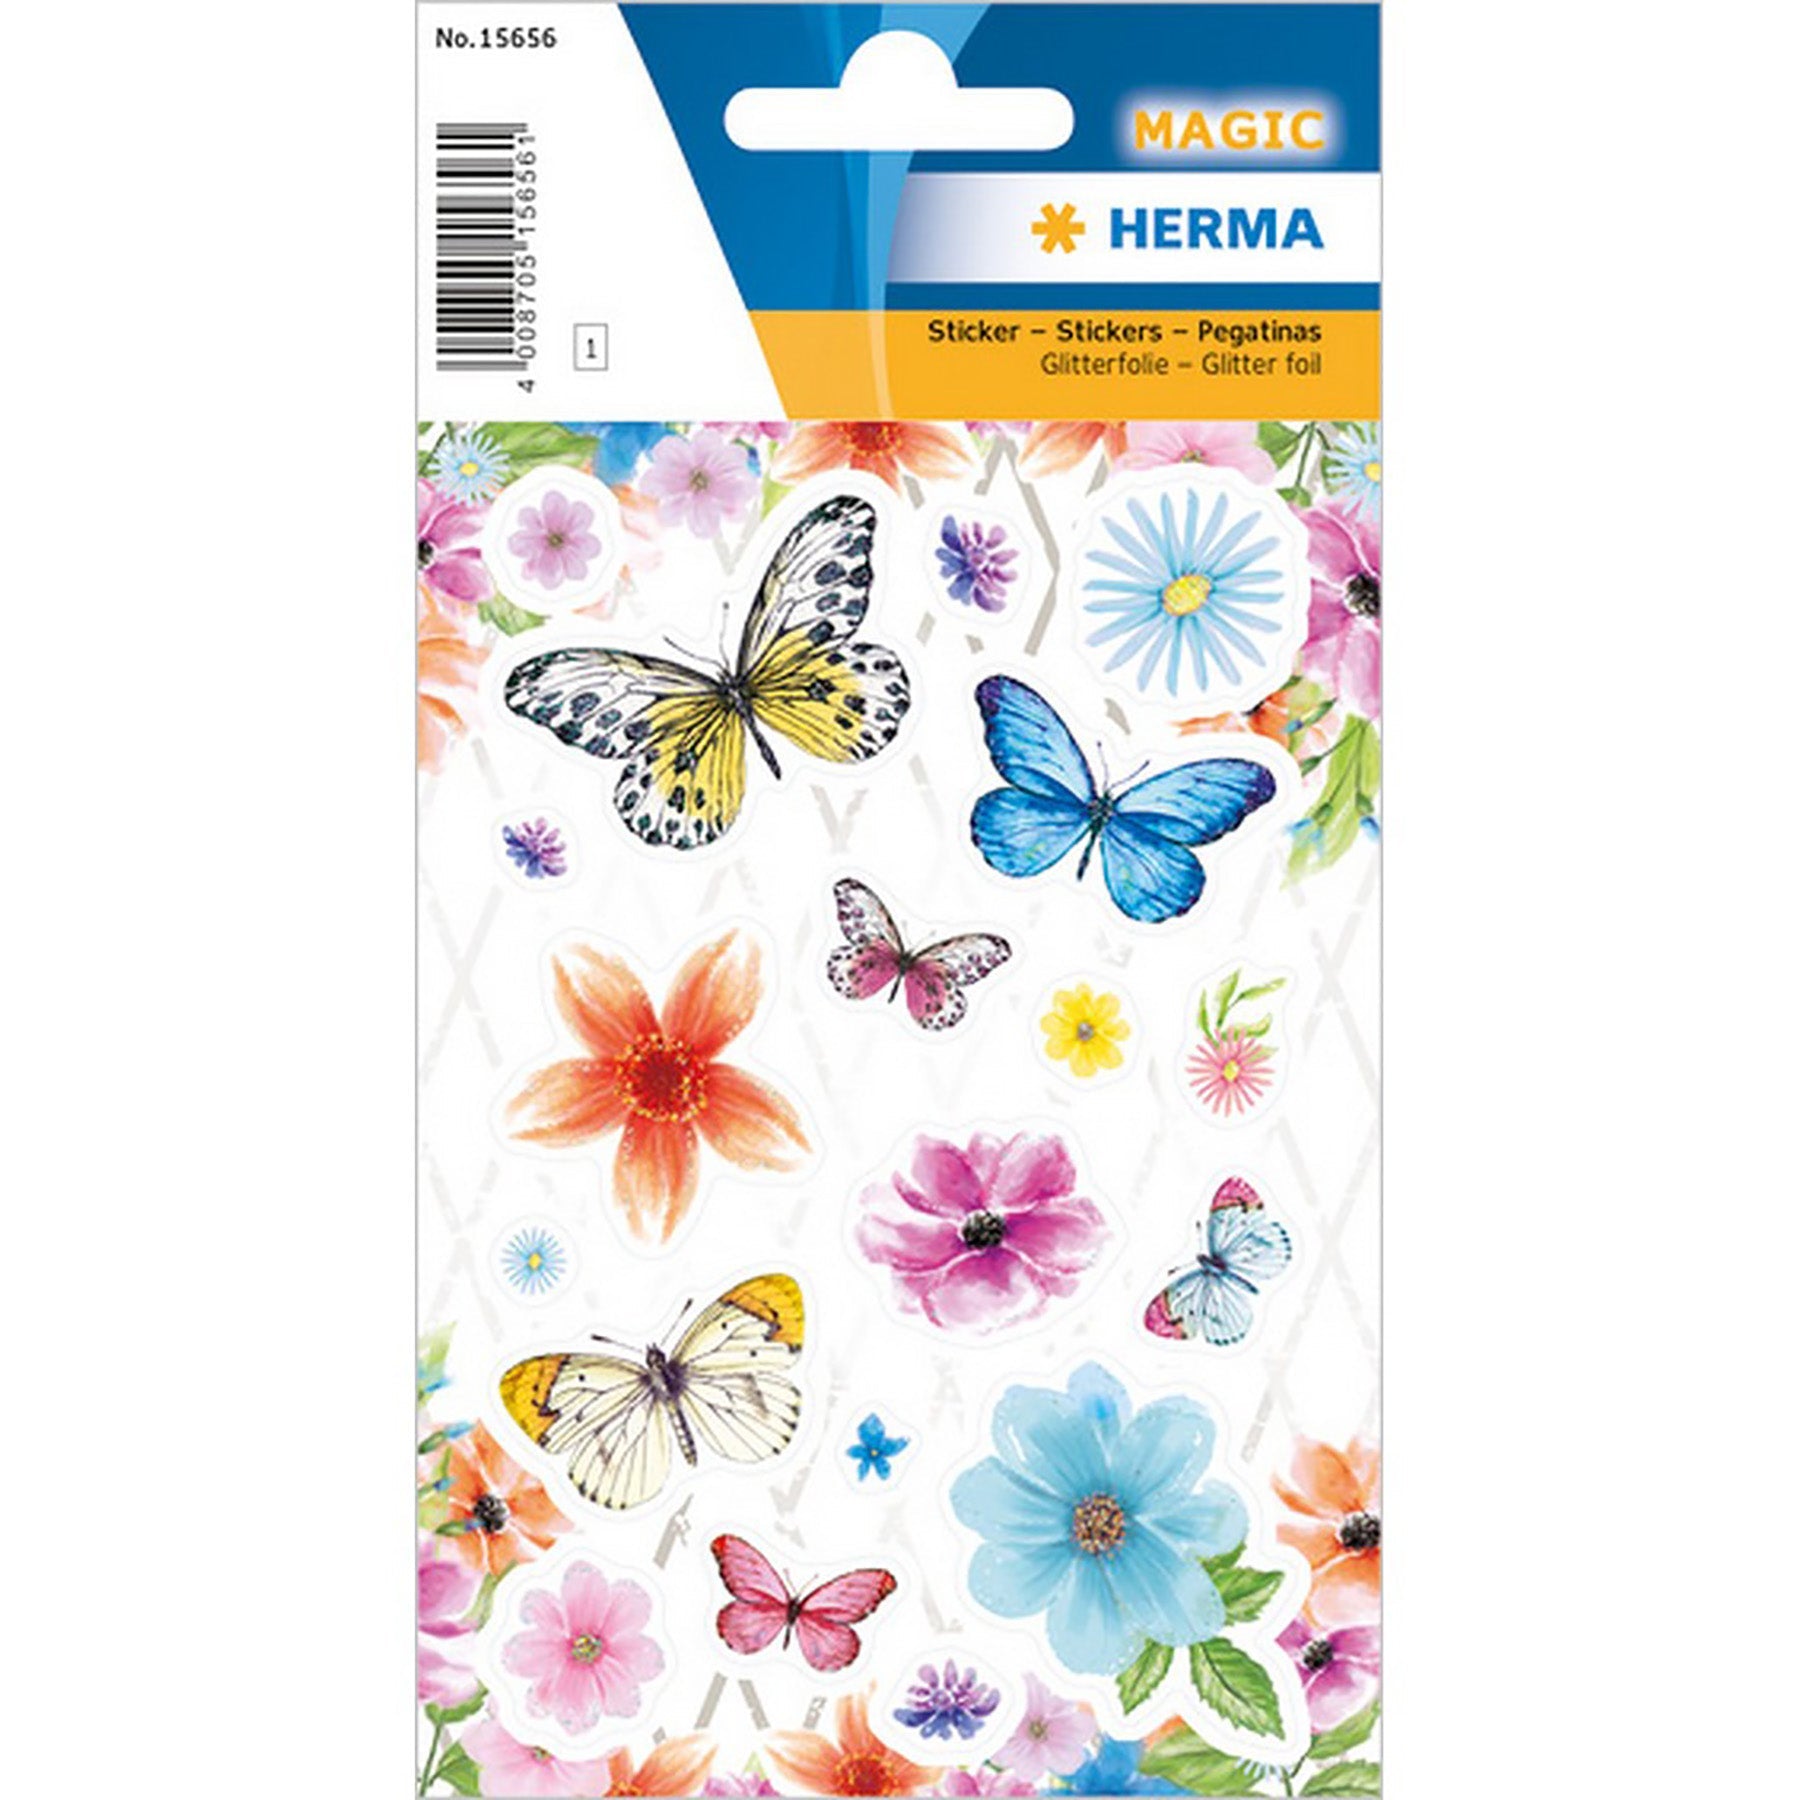 Herma Magic Stickers Flower Paradise Glitter Foil 4.75x3.1in Sheet